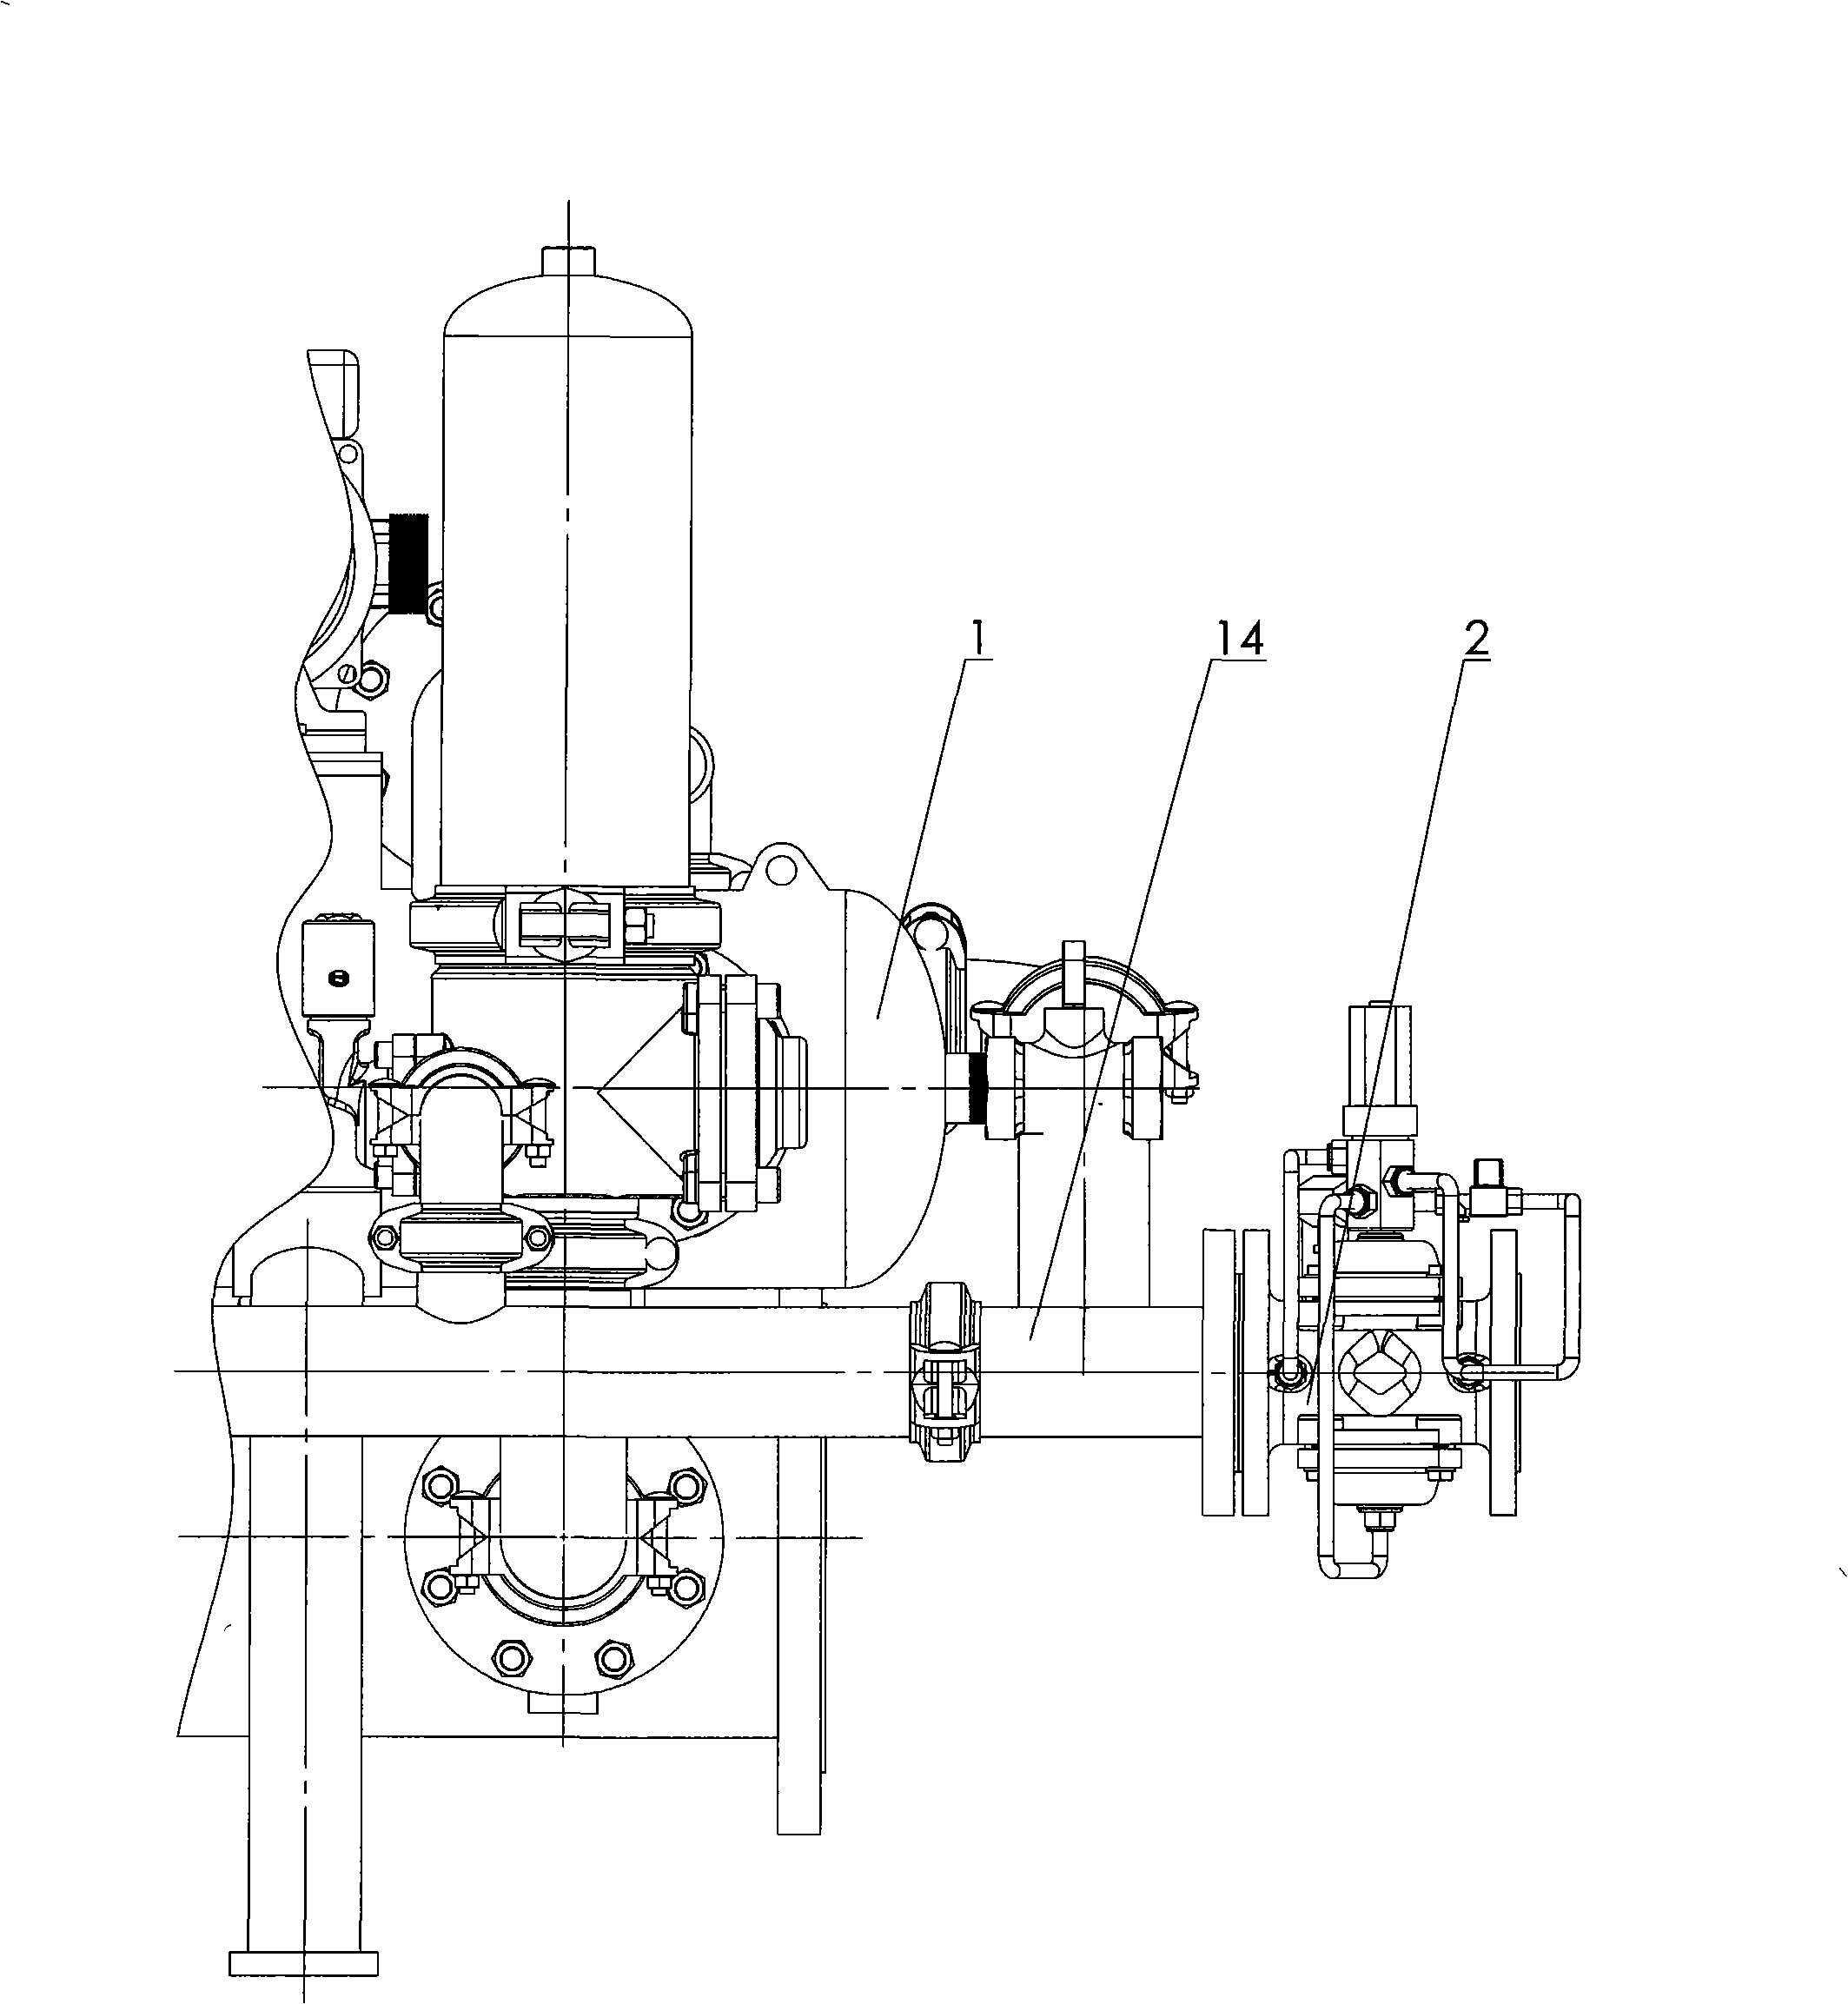 Pressure-holding type pressure balancing sewer valve